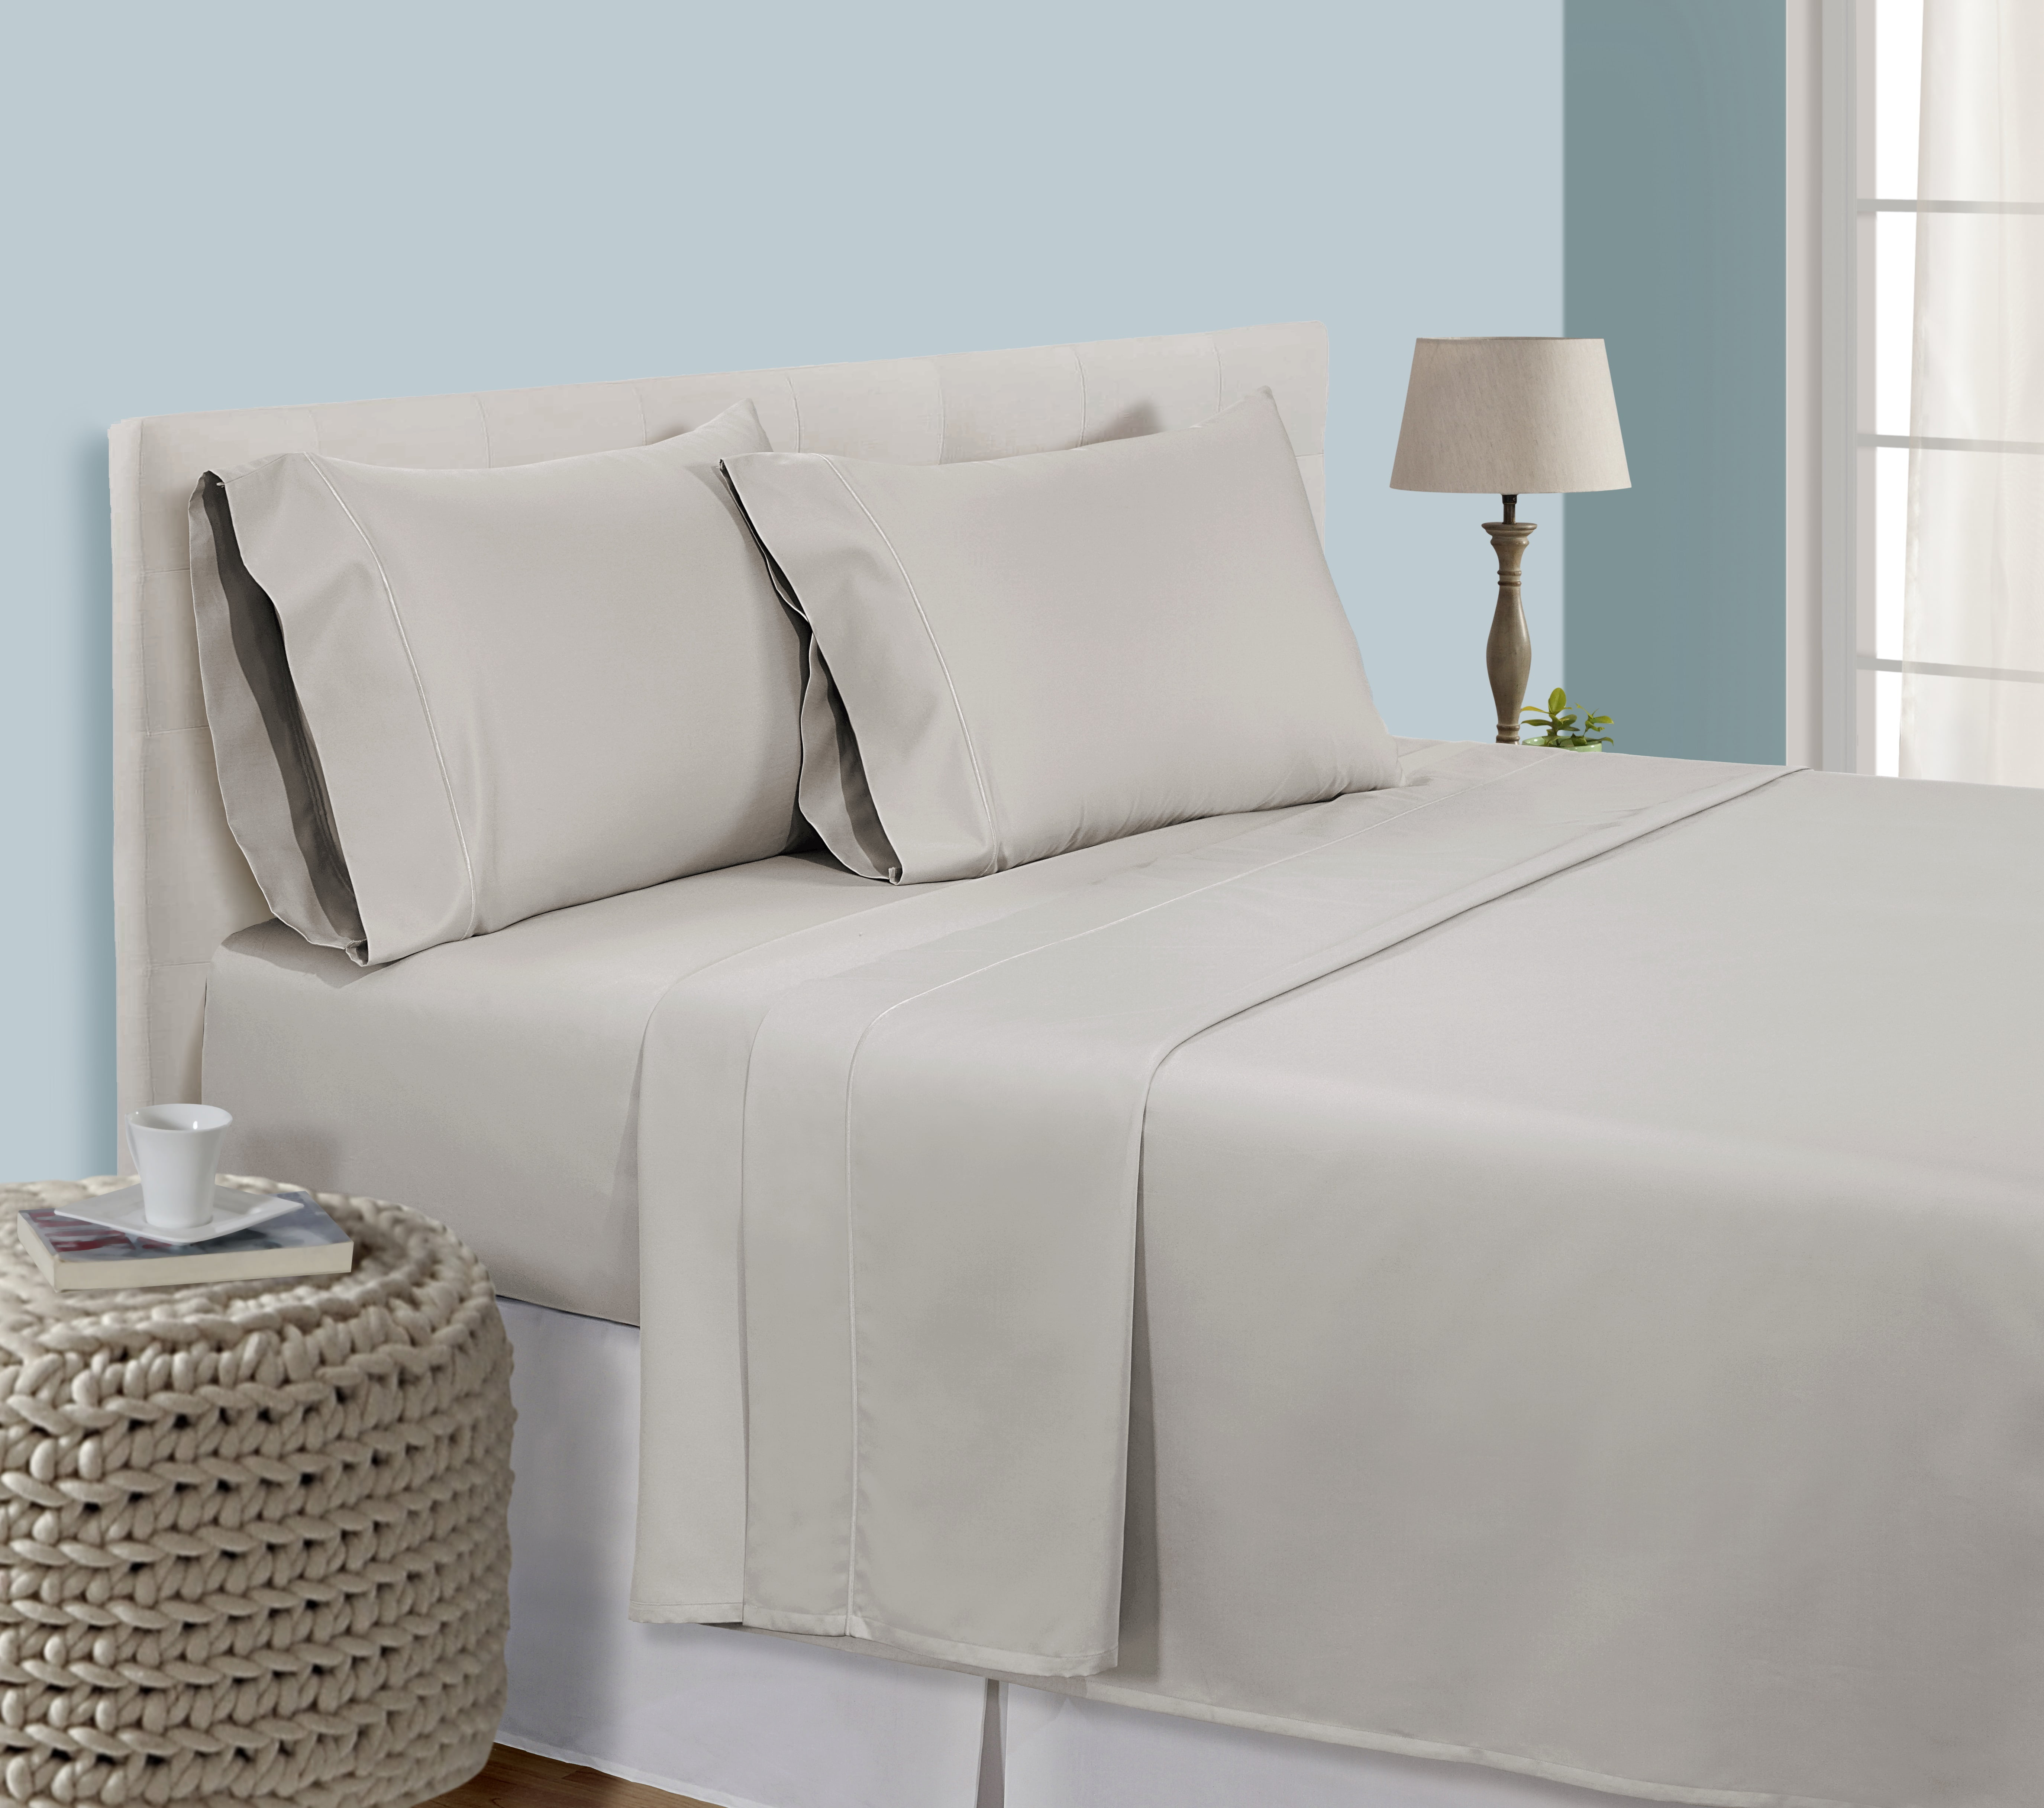 Premium~Bedding~Collection 800 TC 100% Egyptian Cotton All Sizes White Solid